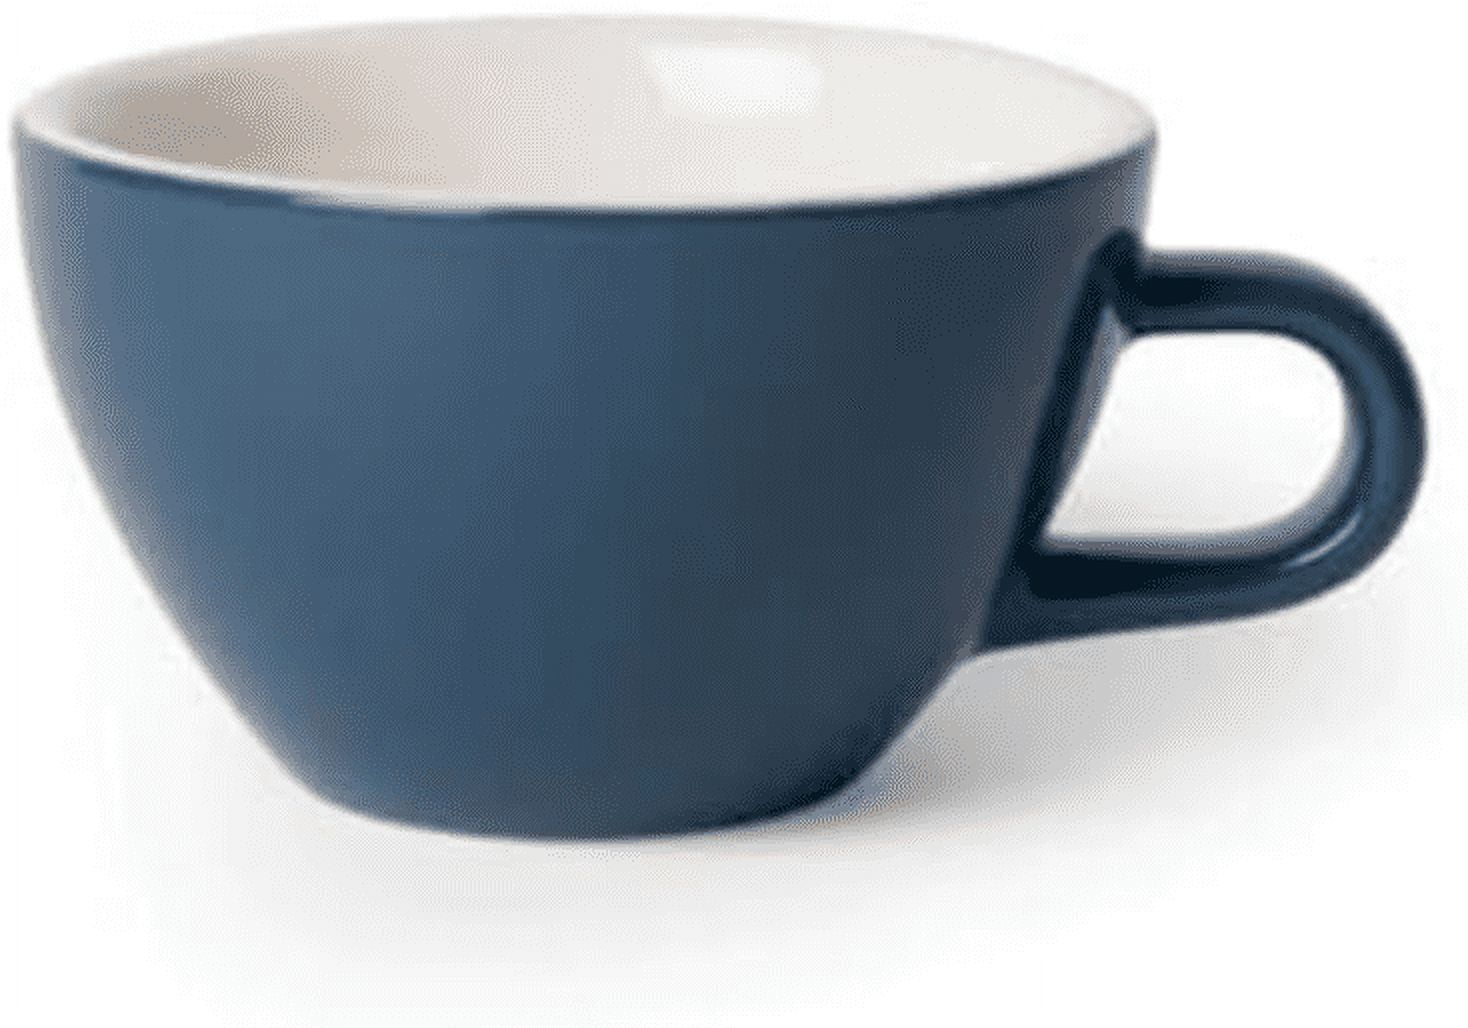 New Acme Evo Latte Cup - Feijoa Green - Set of 6